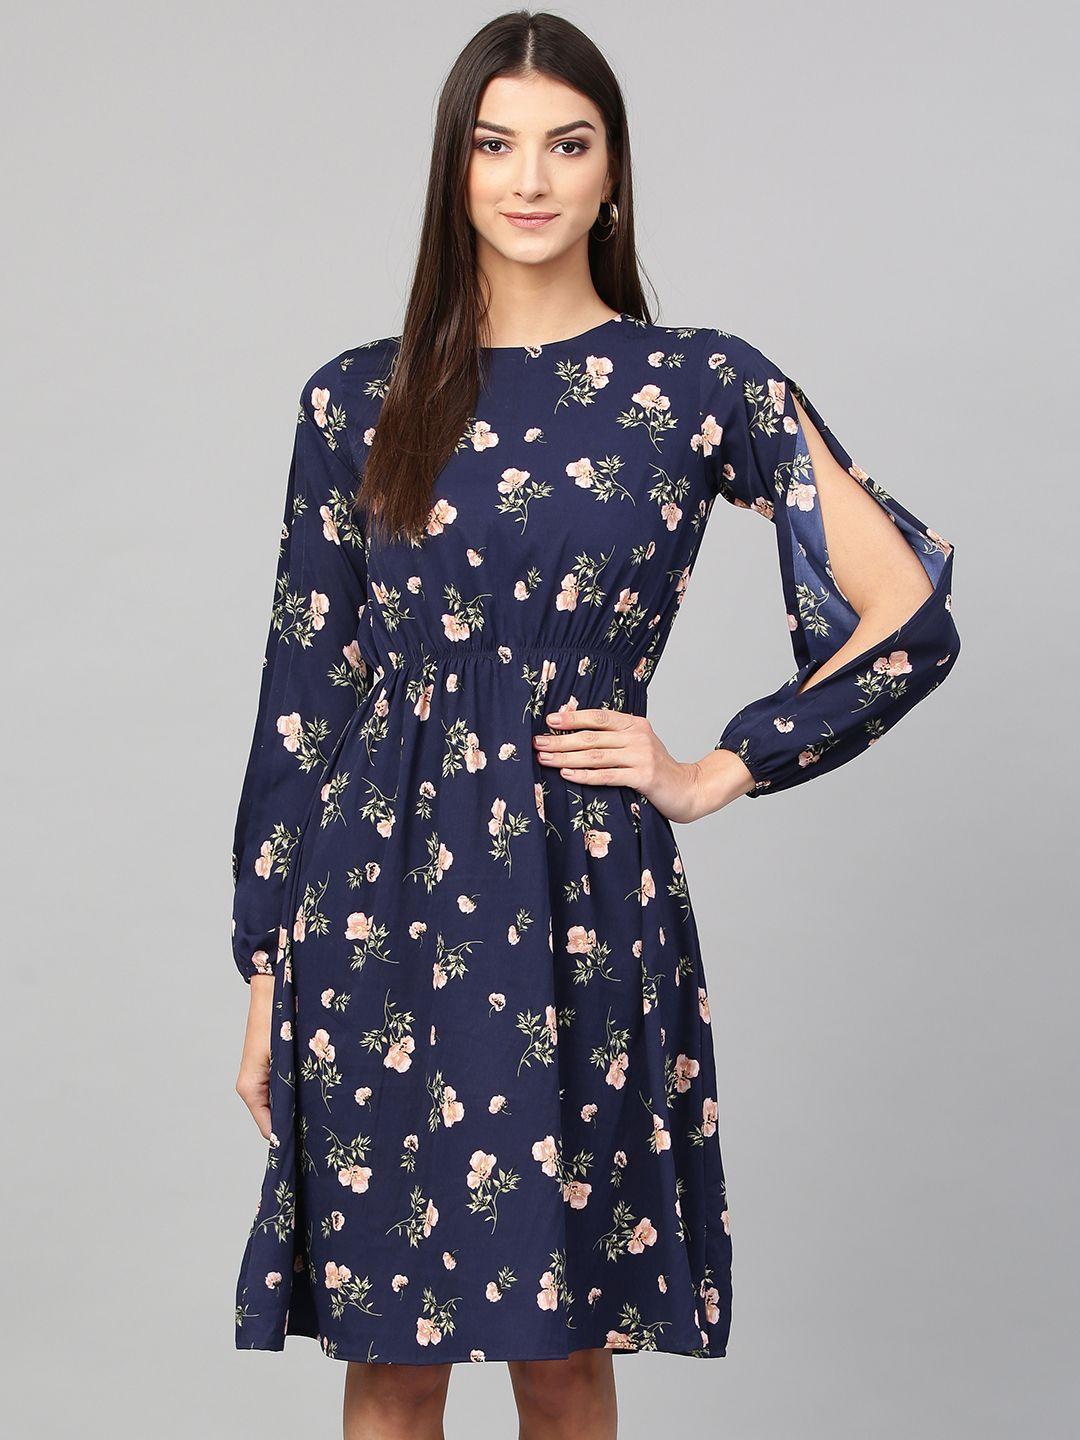 inddus women navy blue & peach-coloured printed a-line dress